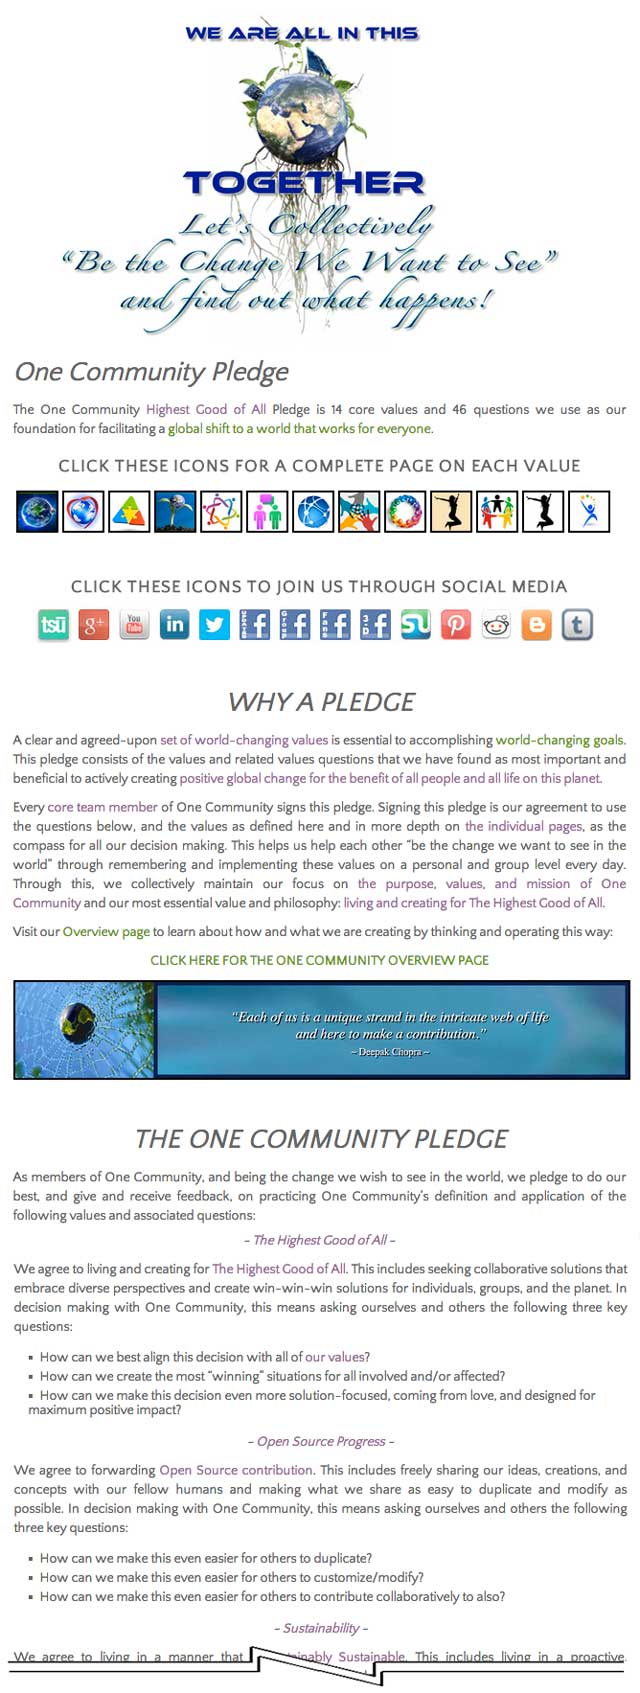 One Community Pledge